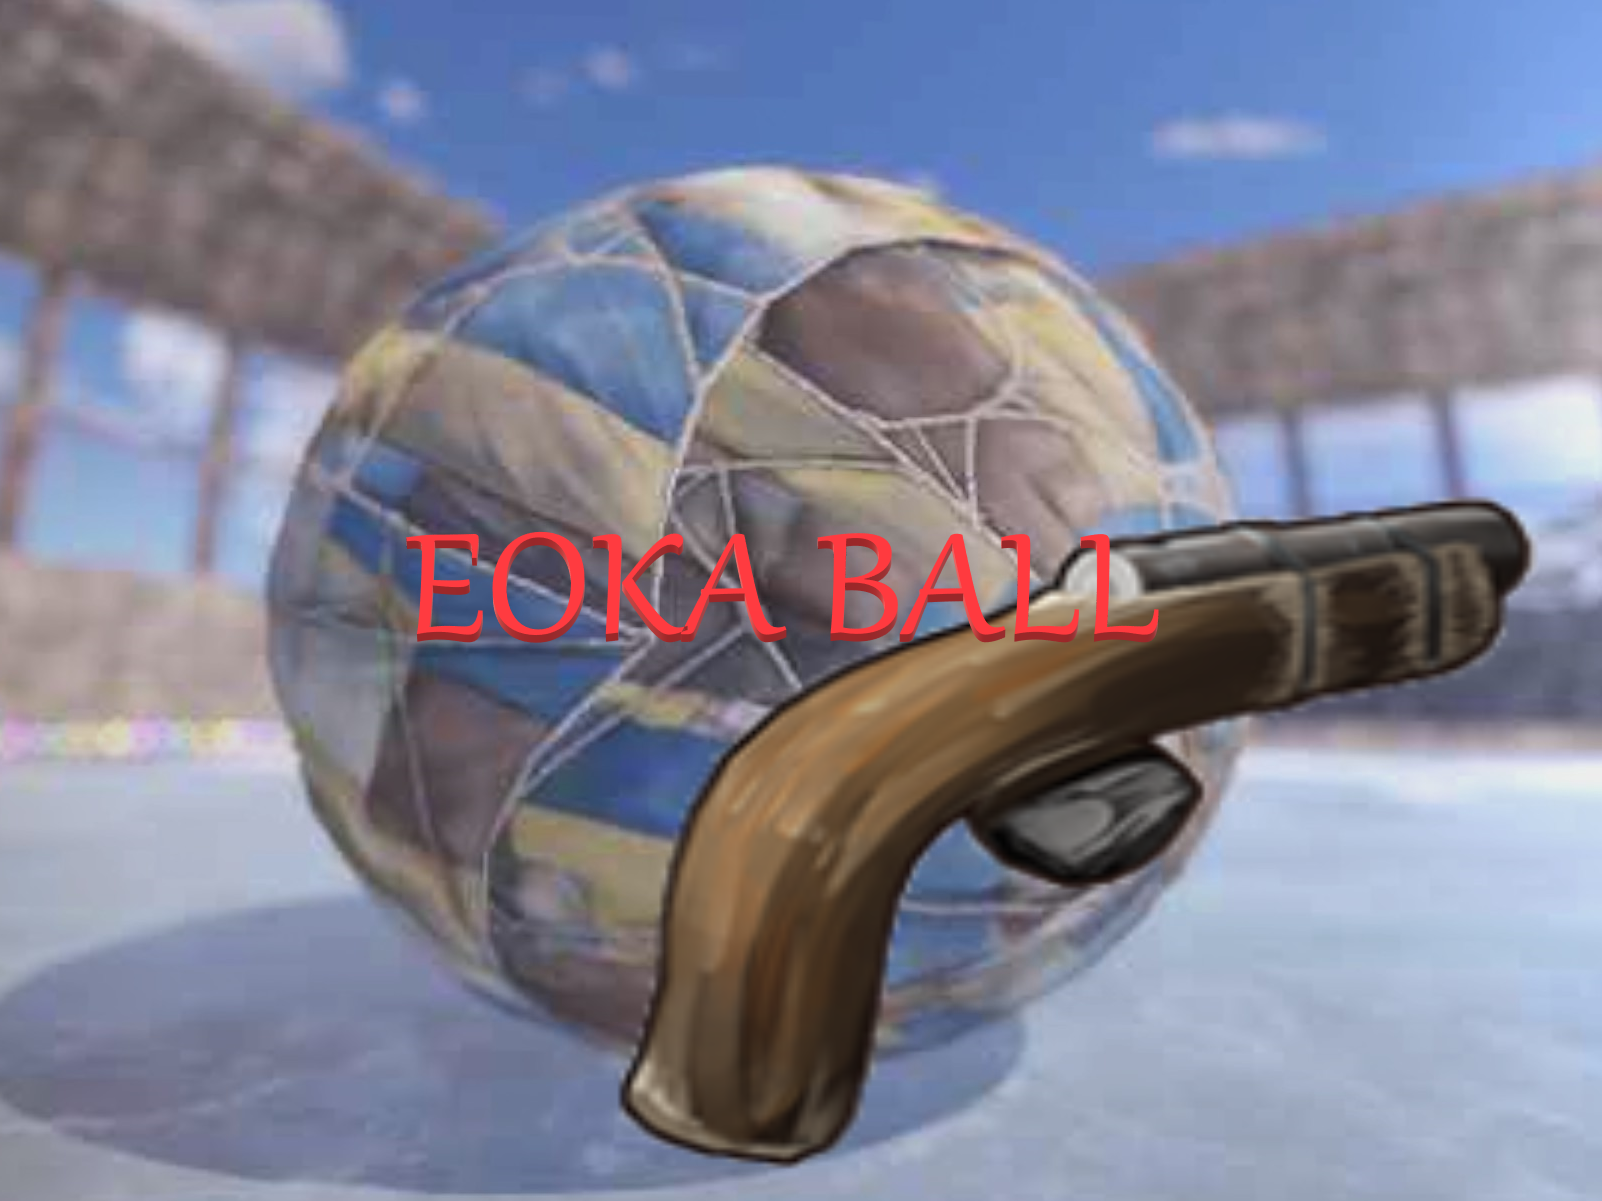 EOKA BALL